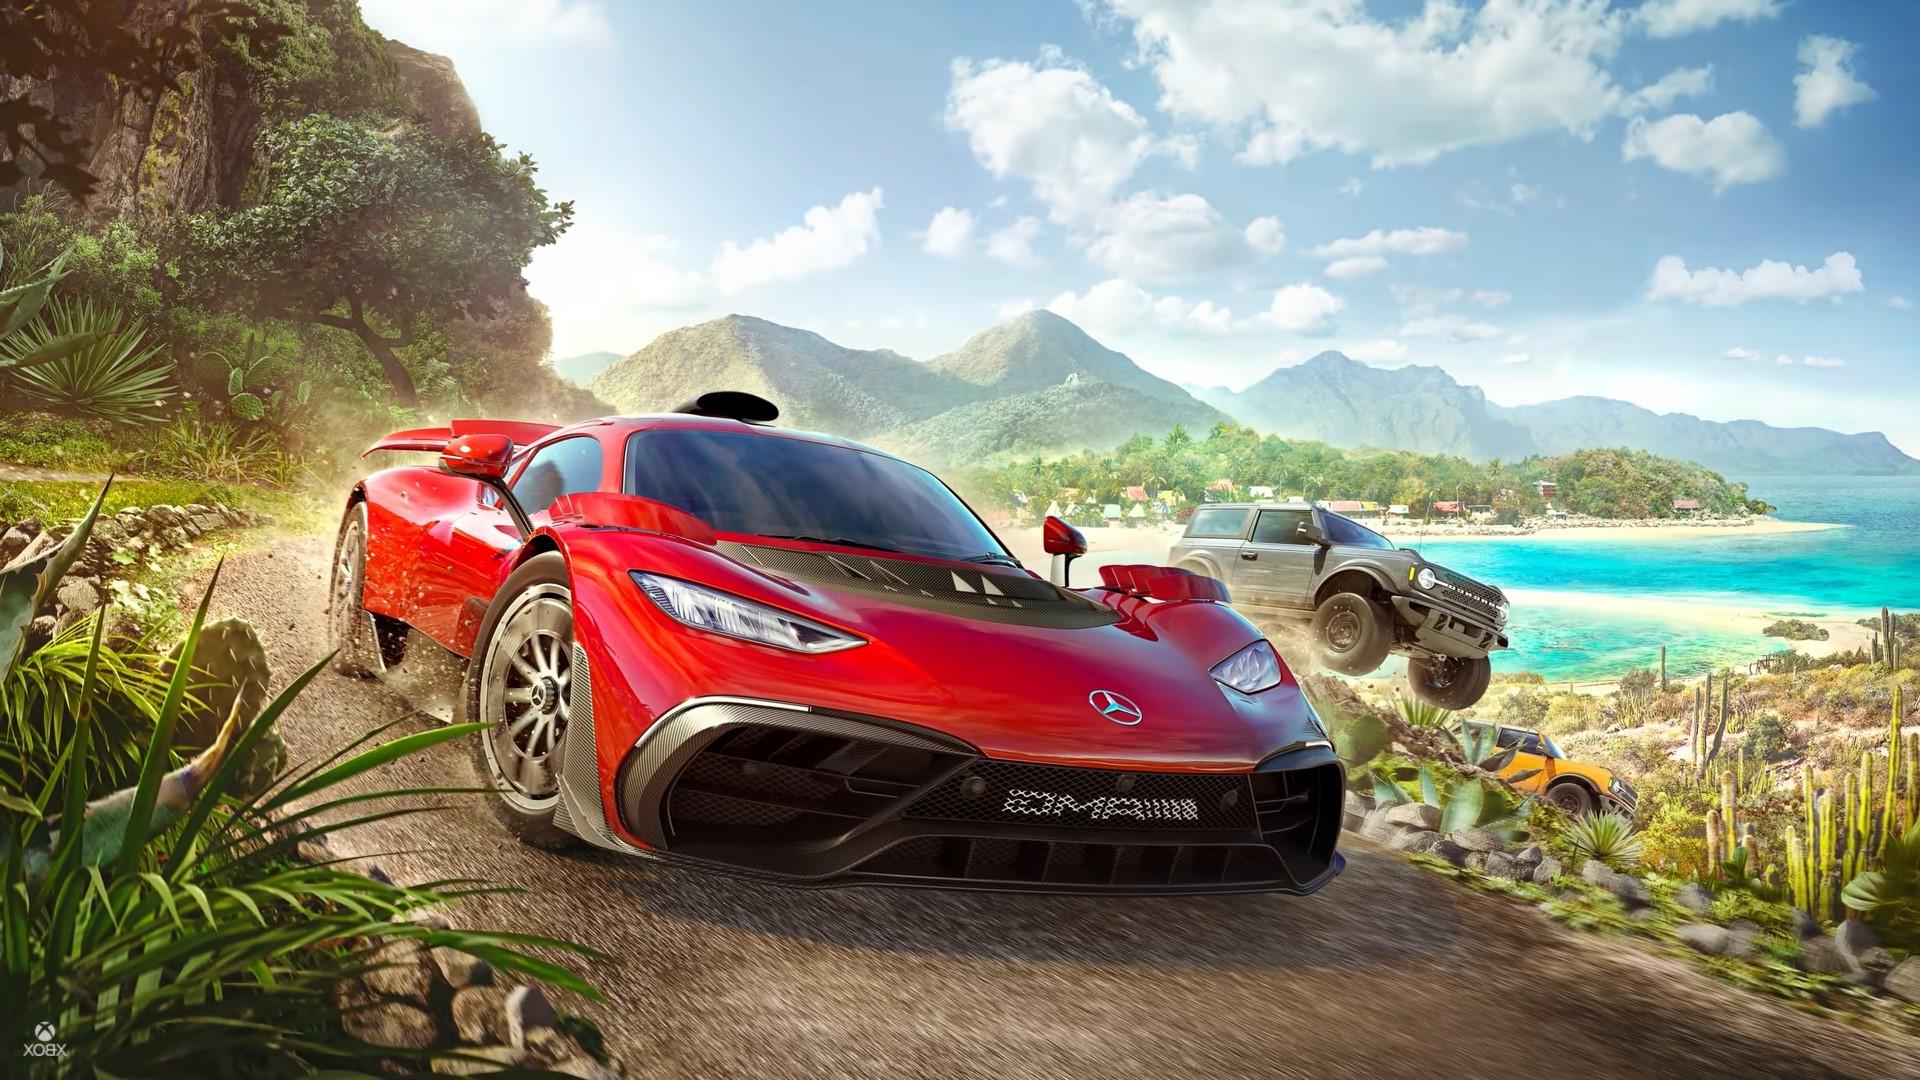 Forza Horizon 5 Car Wallpapers